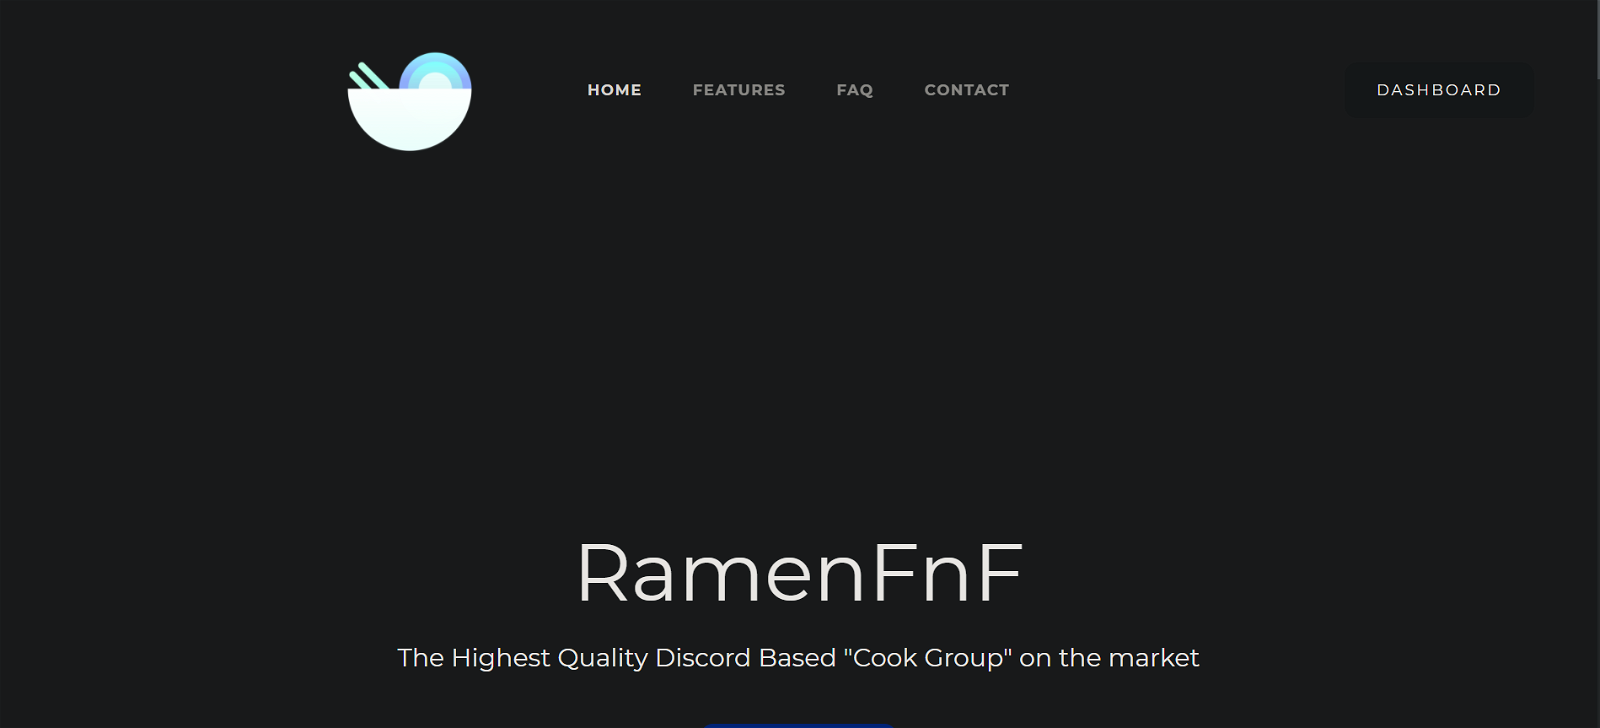 RamenFNF cook group presentation banner